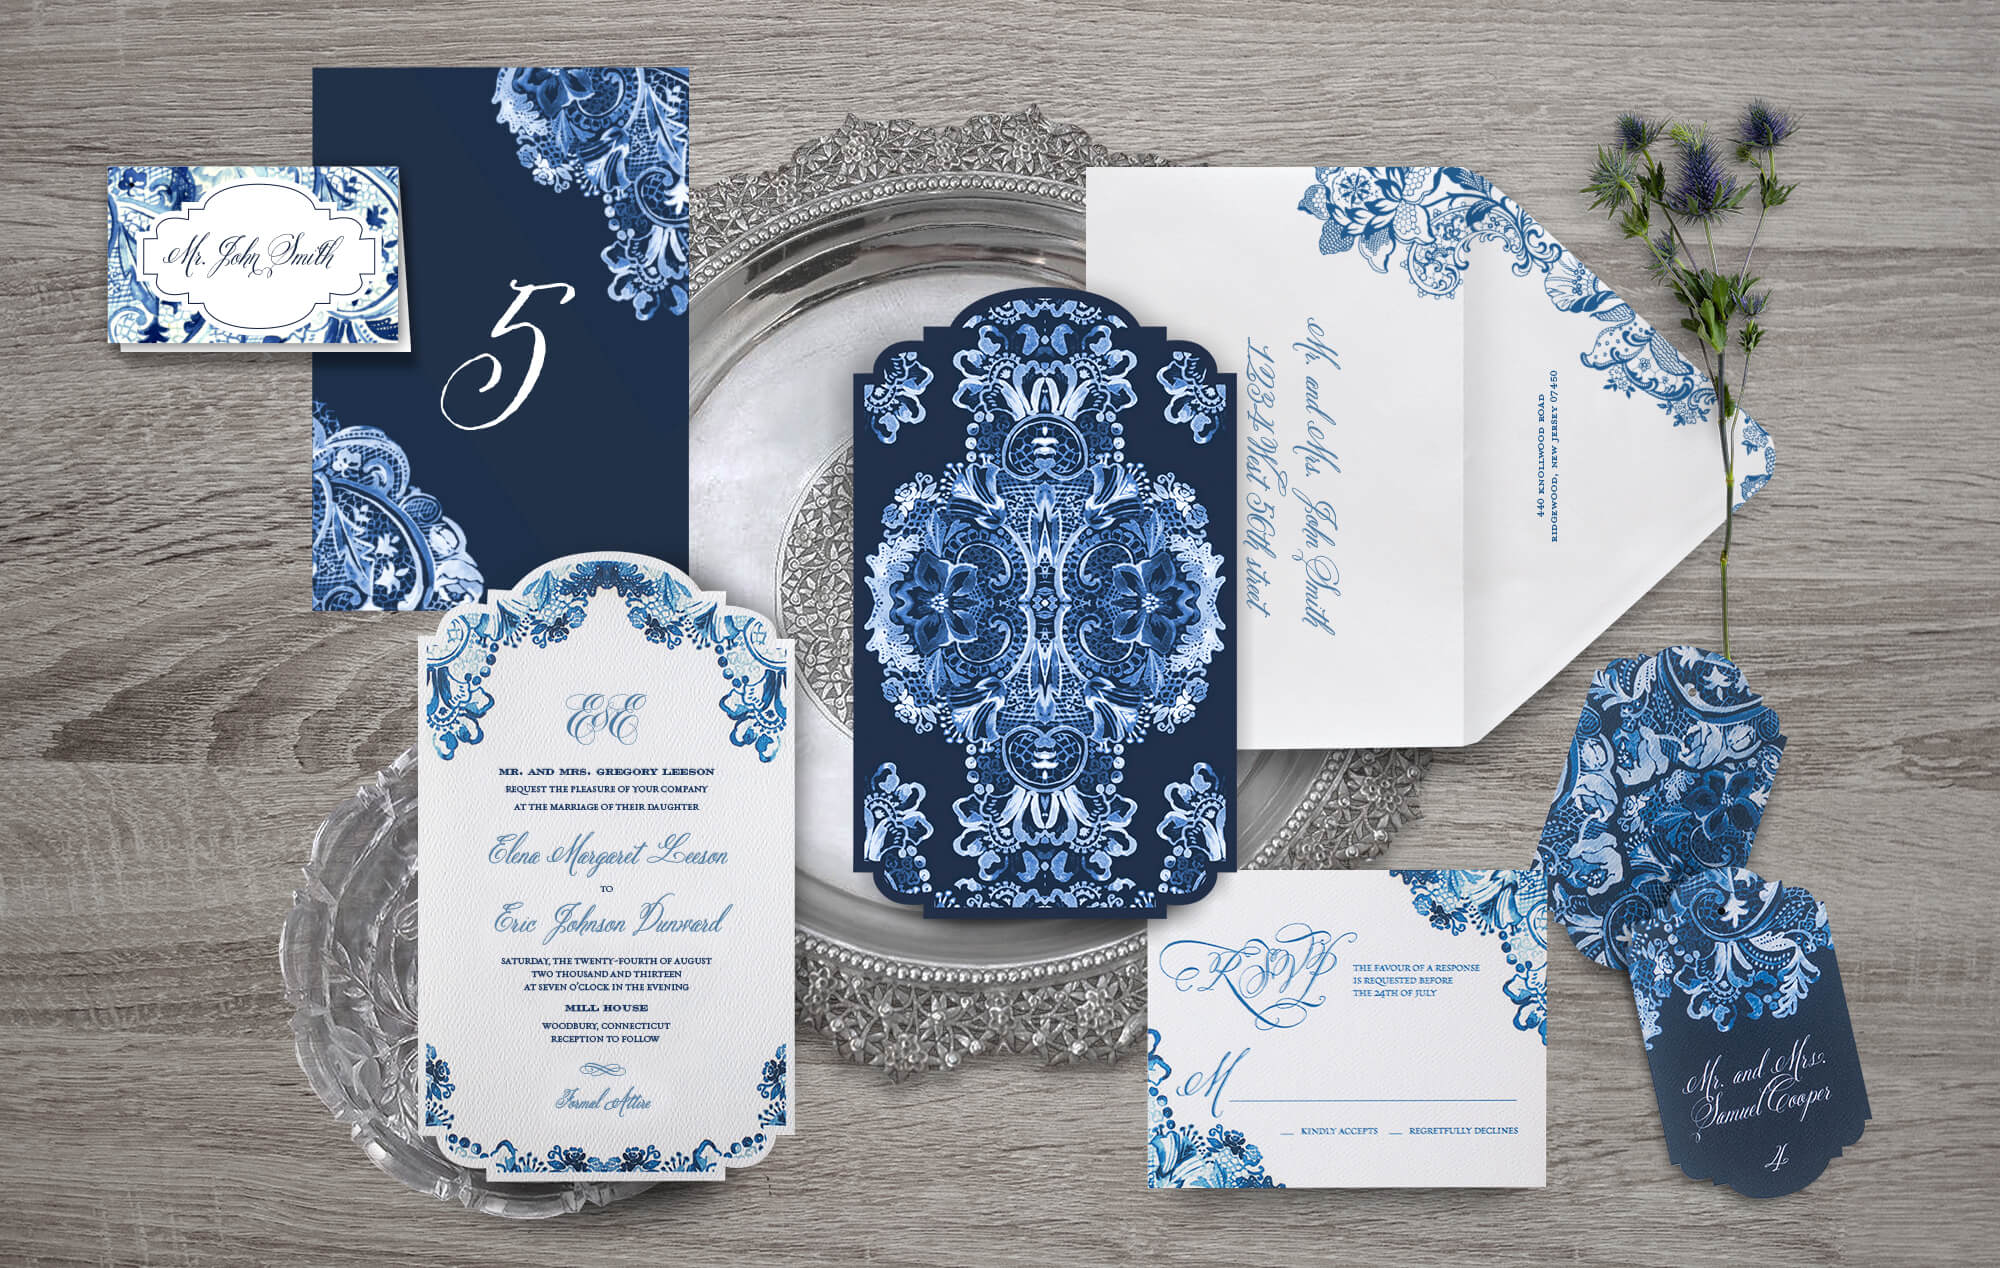 Blue and white wedding invitation